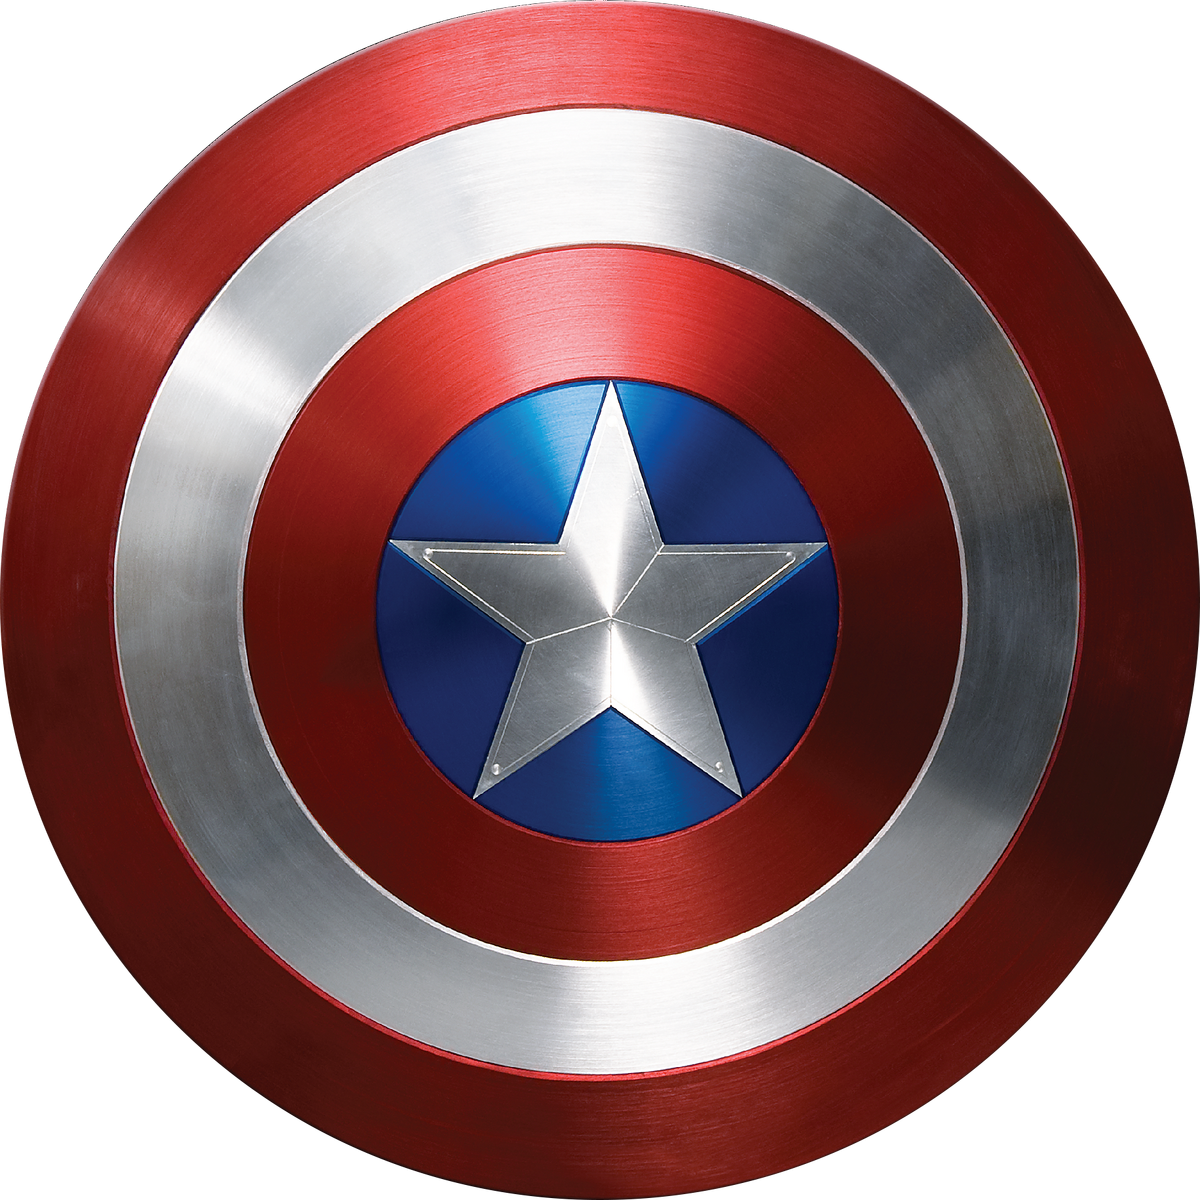 Captain America Shield Cosplay Infinity War Avengers 3 Light Ver Figure In Box 